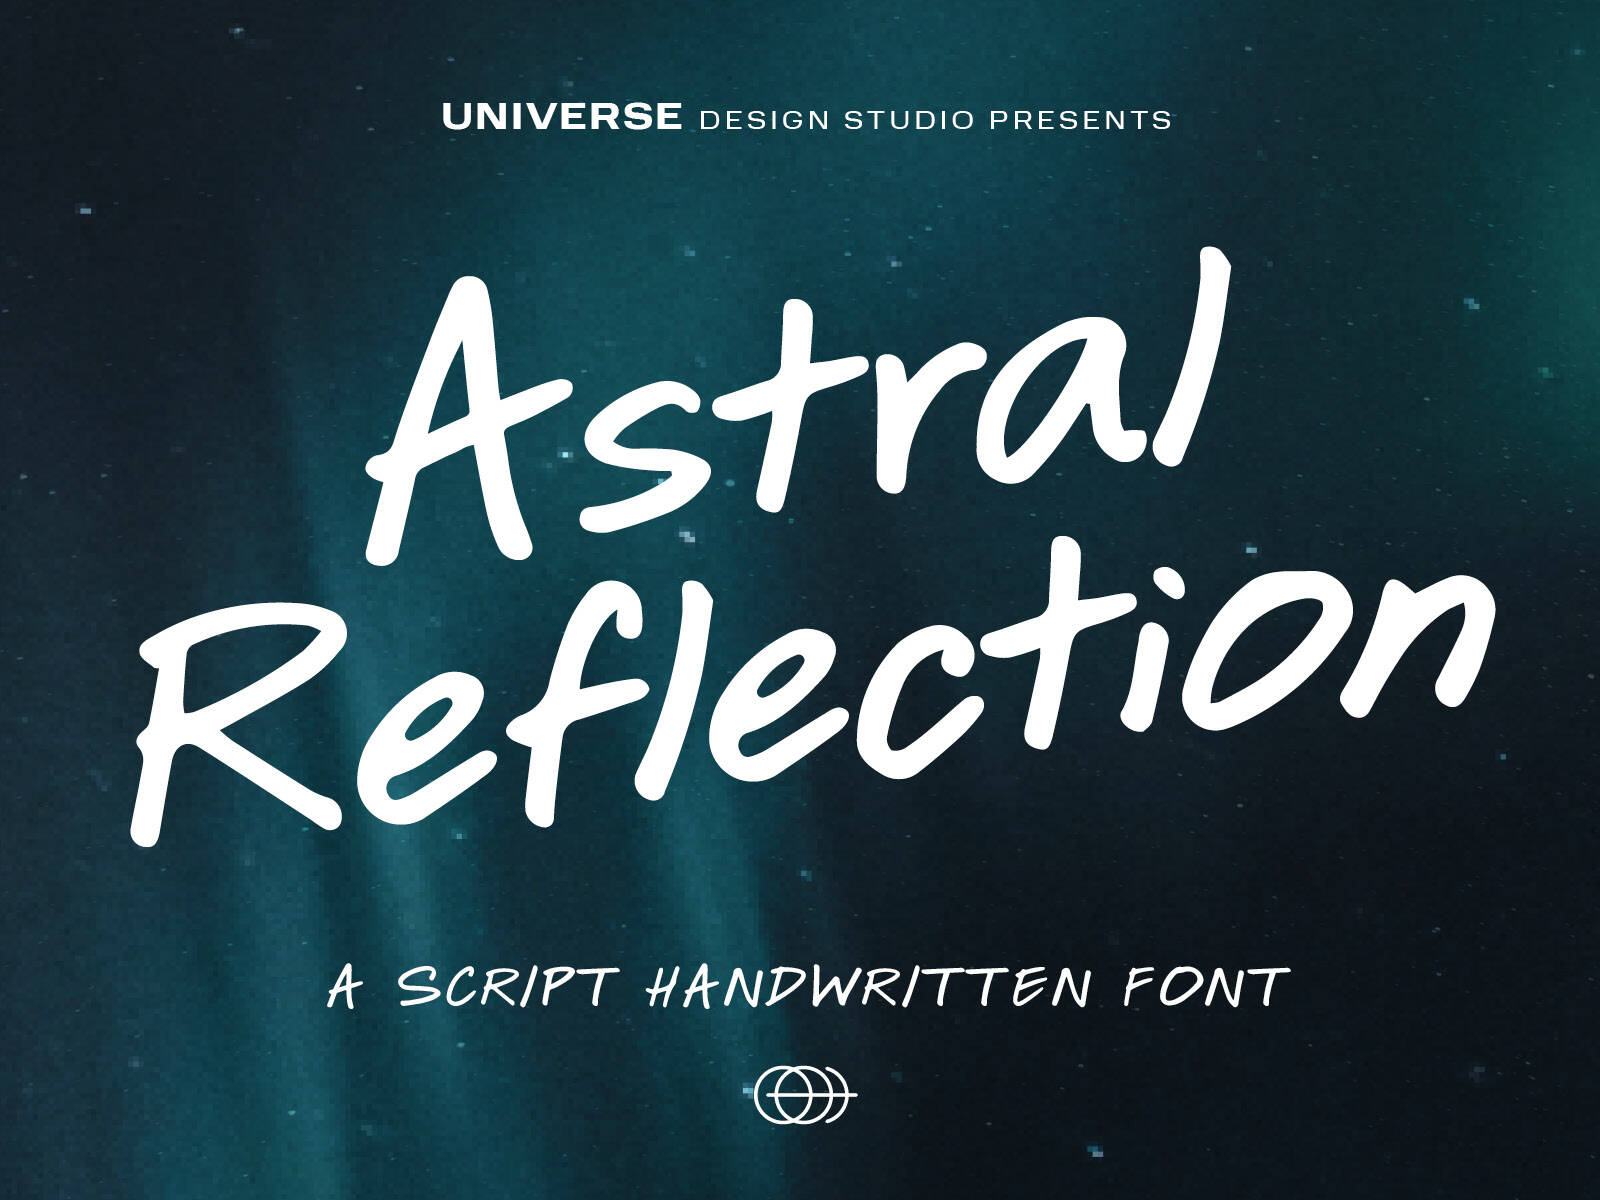 Astral-Reflection_Font-type-designer-handwritten-script-font